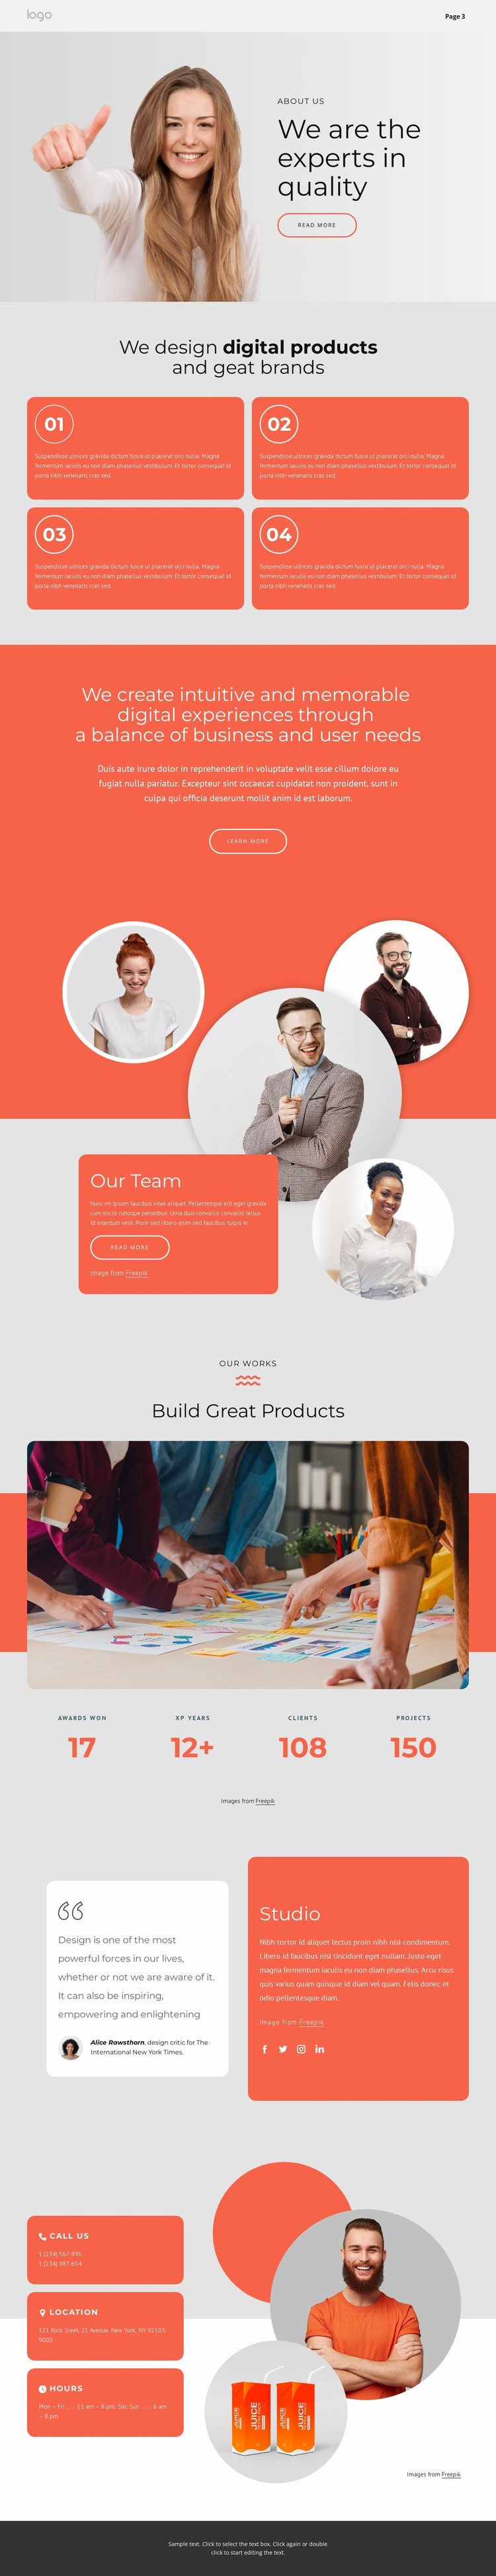 We design great brands Website Design